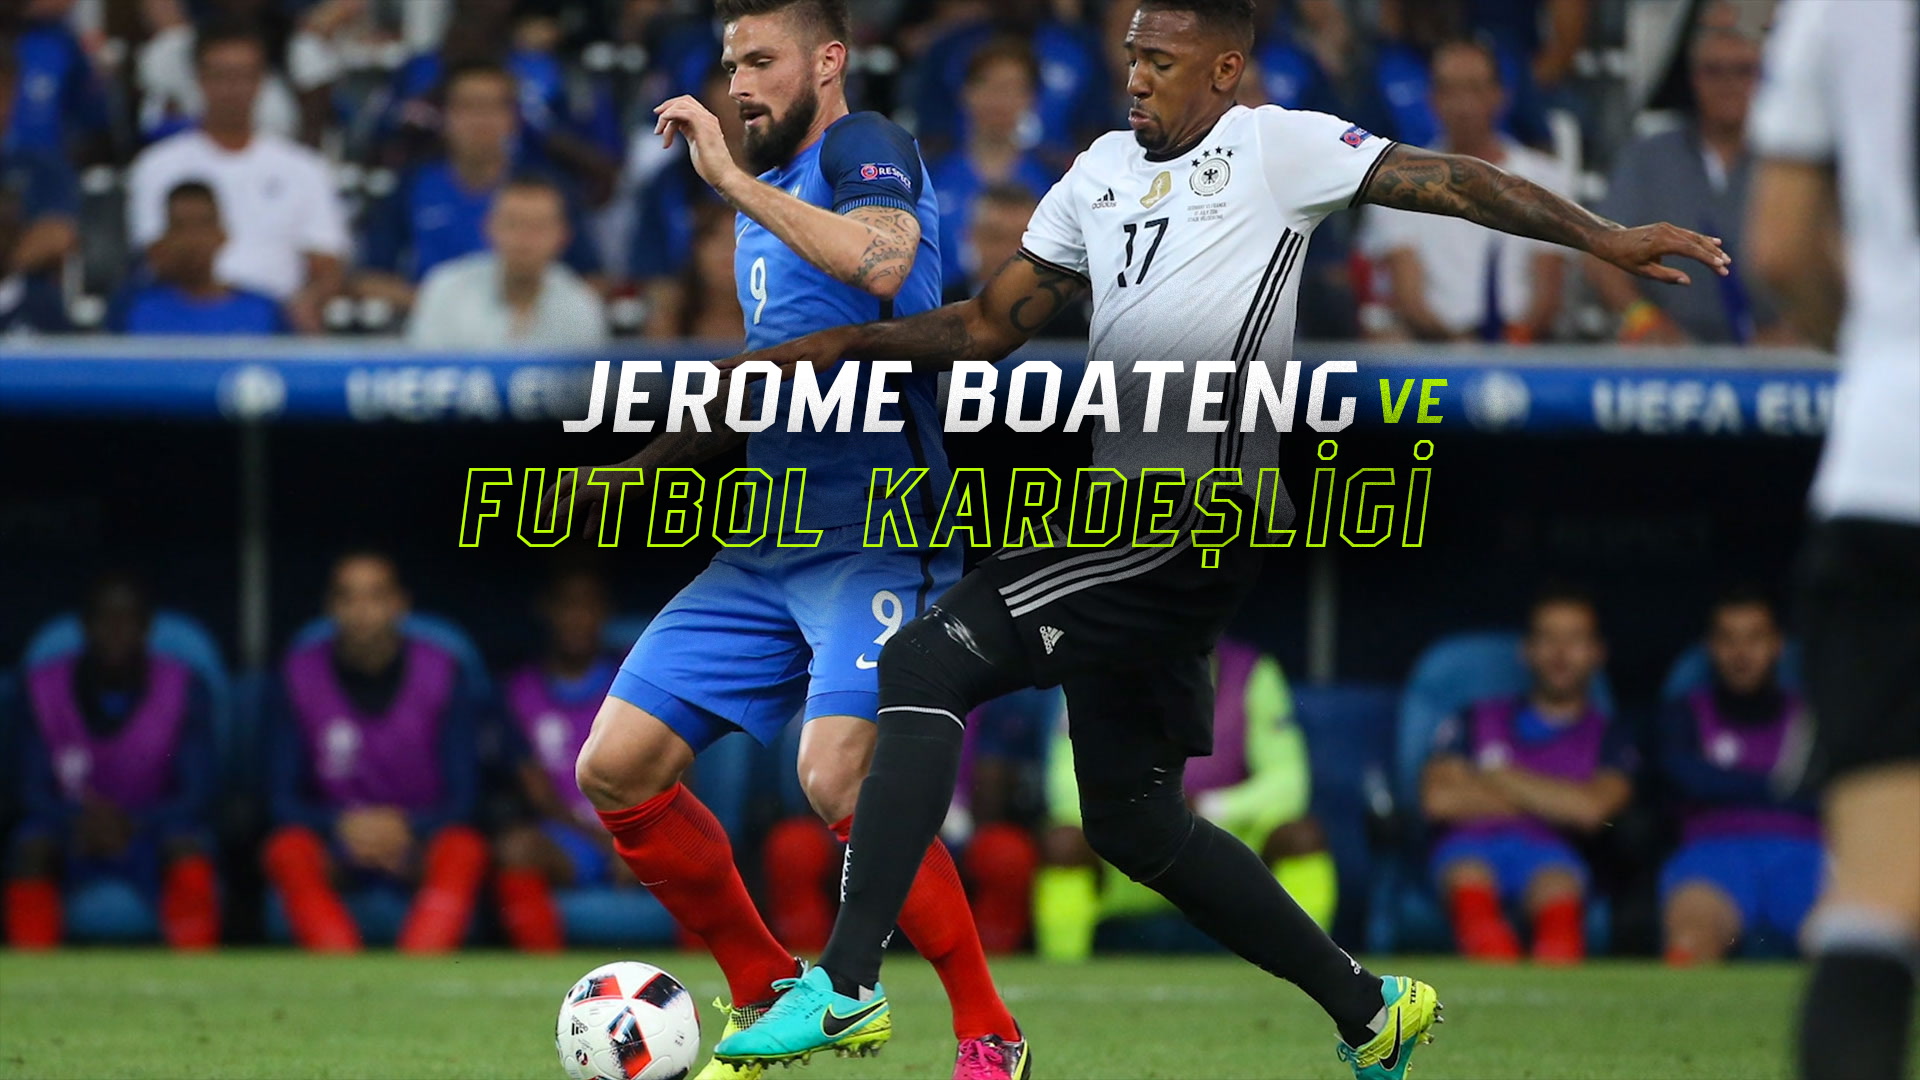 Jerome Boateng ve futbol kardeşliği